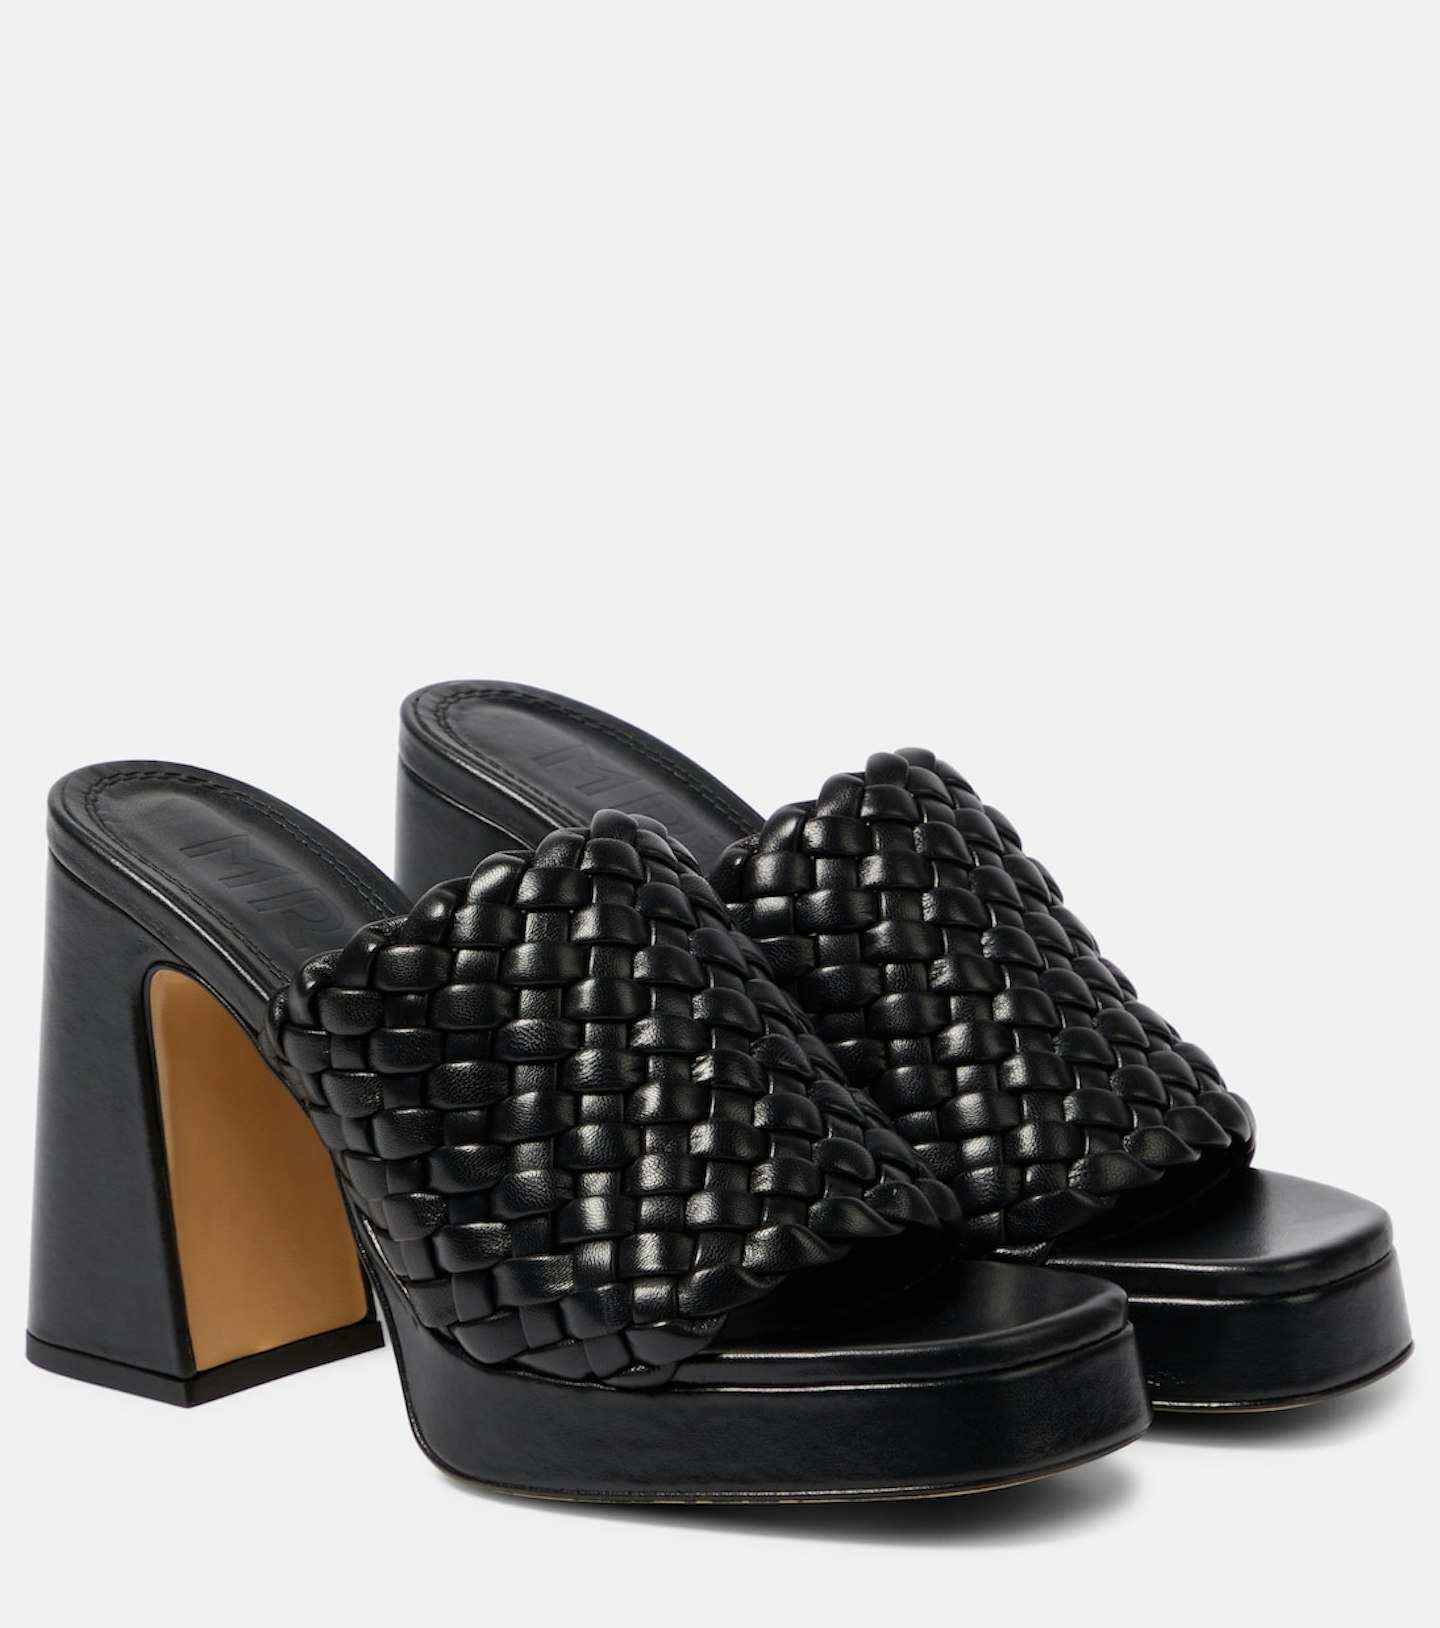 Souliers Martinez, Paloma Leather Sandals